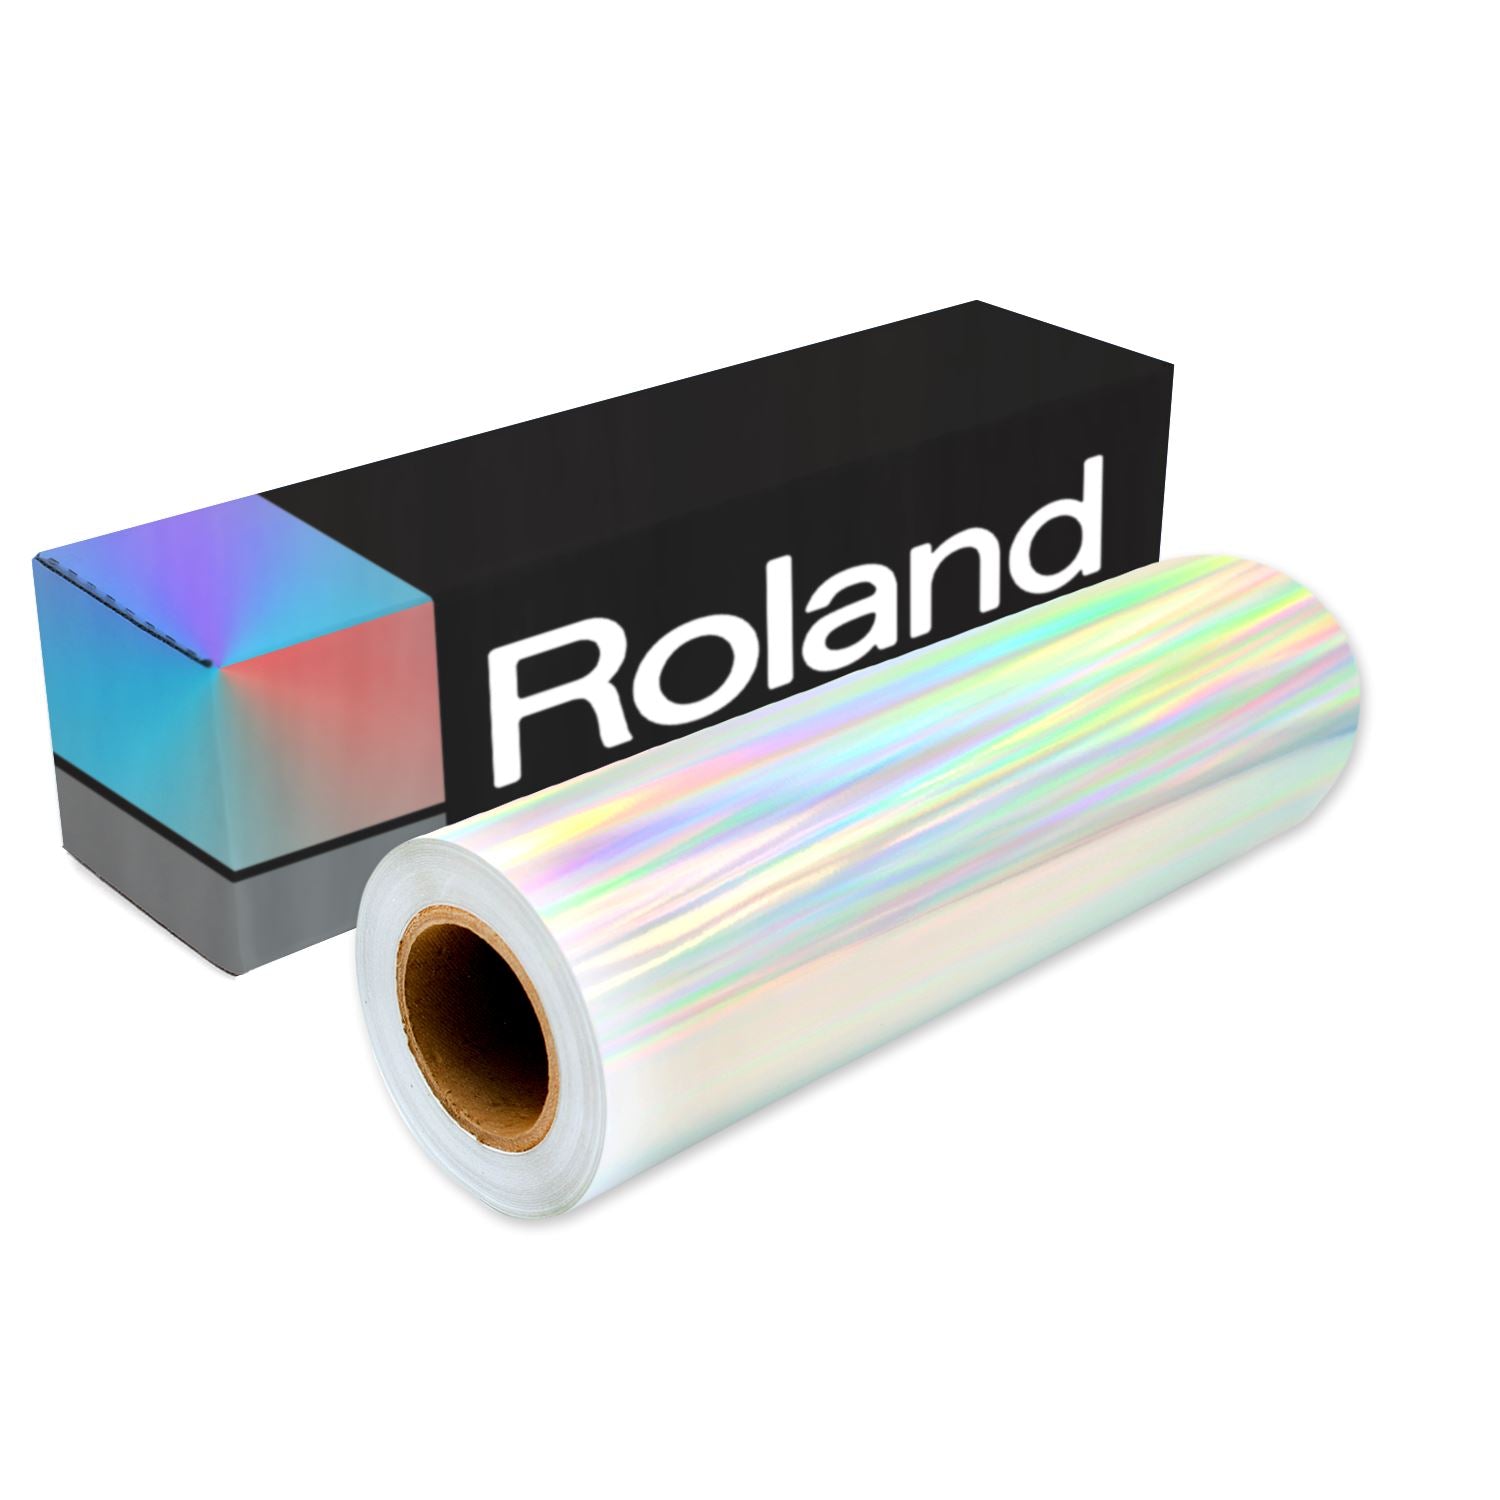 Roland Holographic Prism Adhesive Vinyl Film - 15 x 75 ft